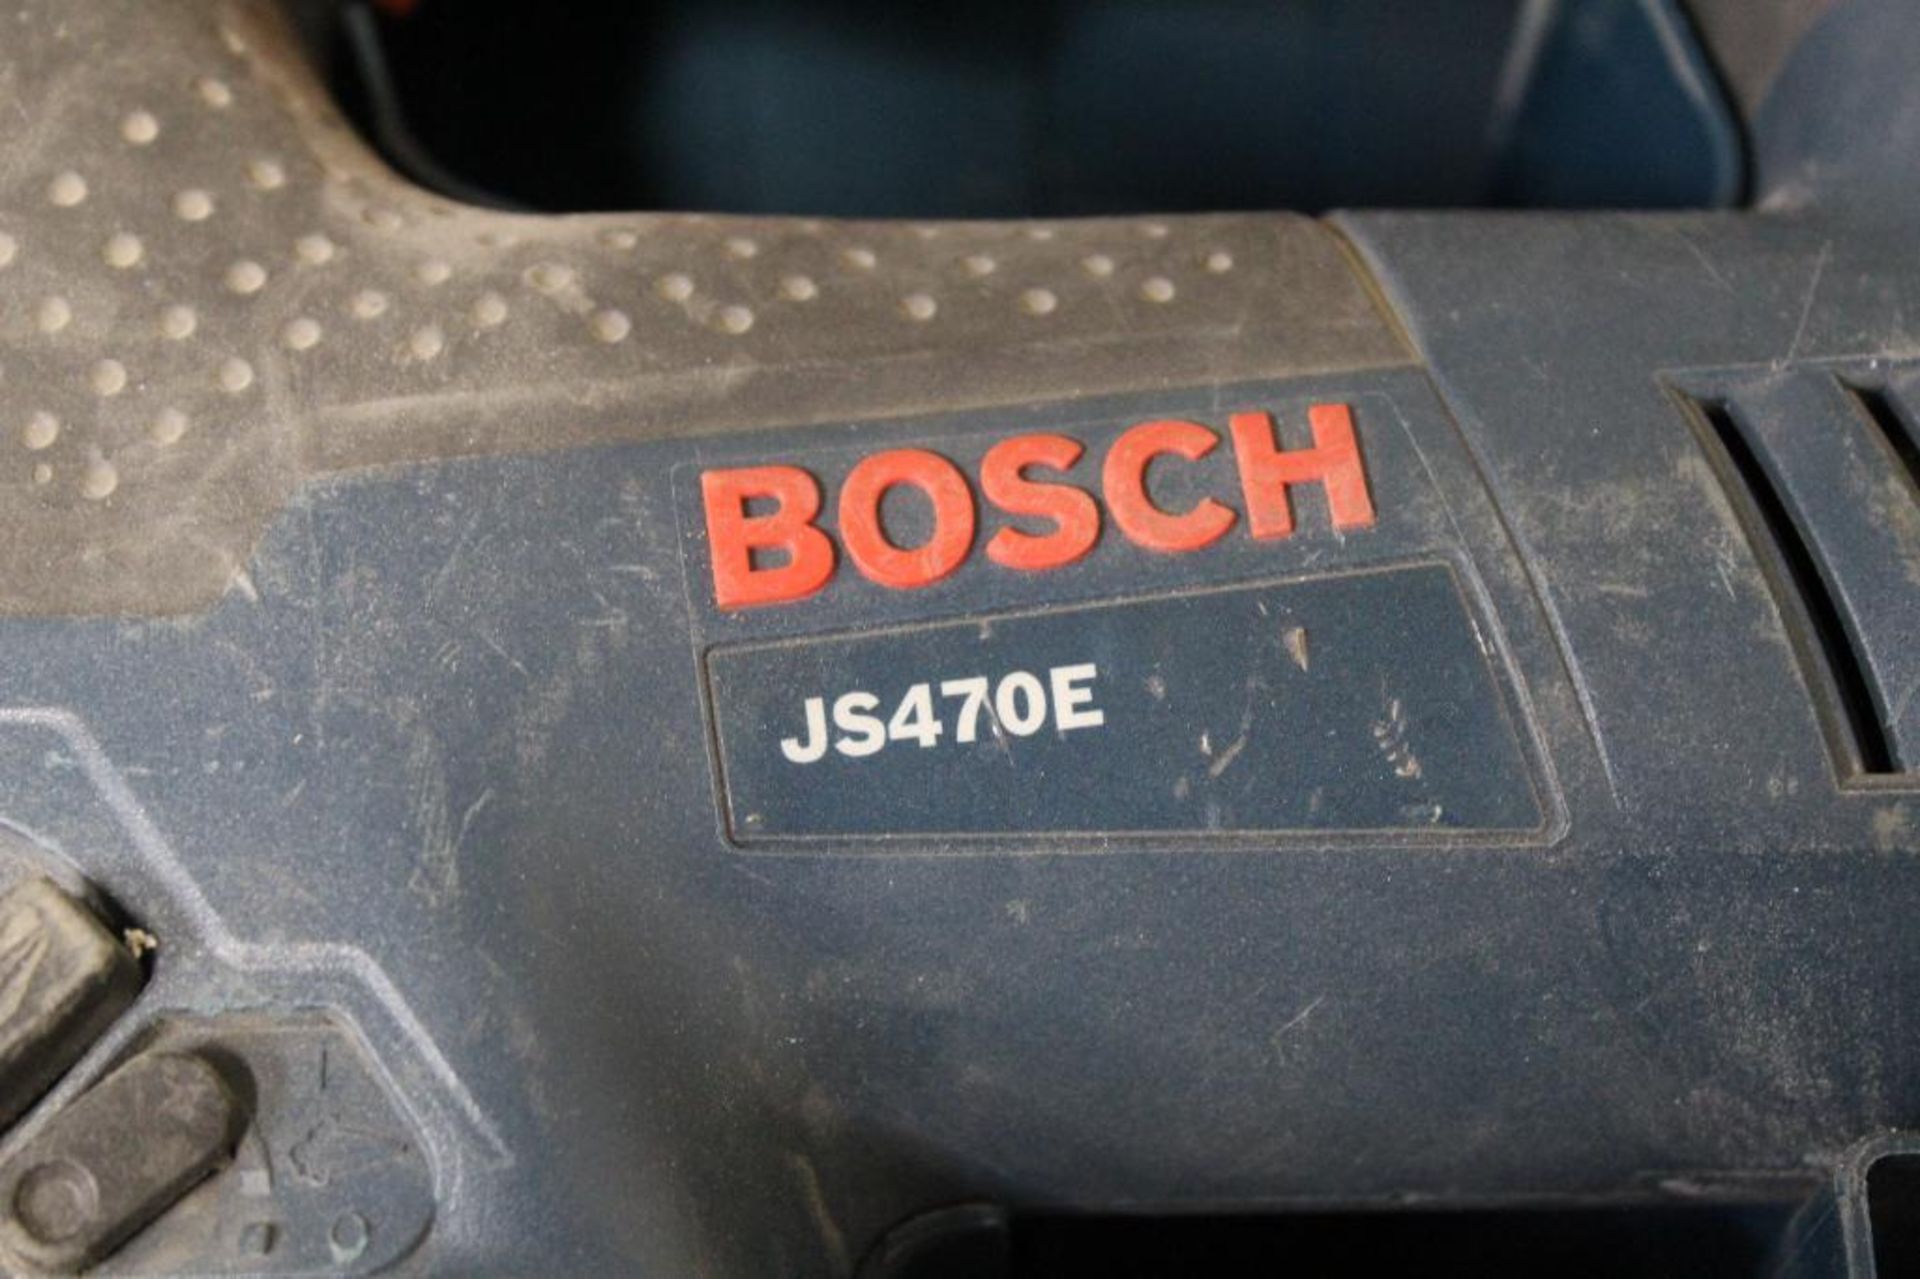 Bosch Jigsaw Model JS470E - Image 3 of 3